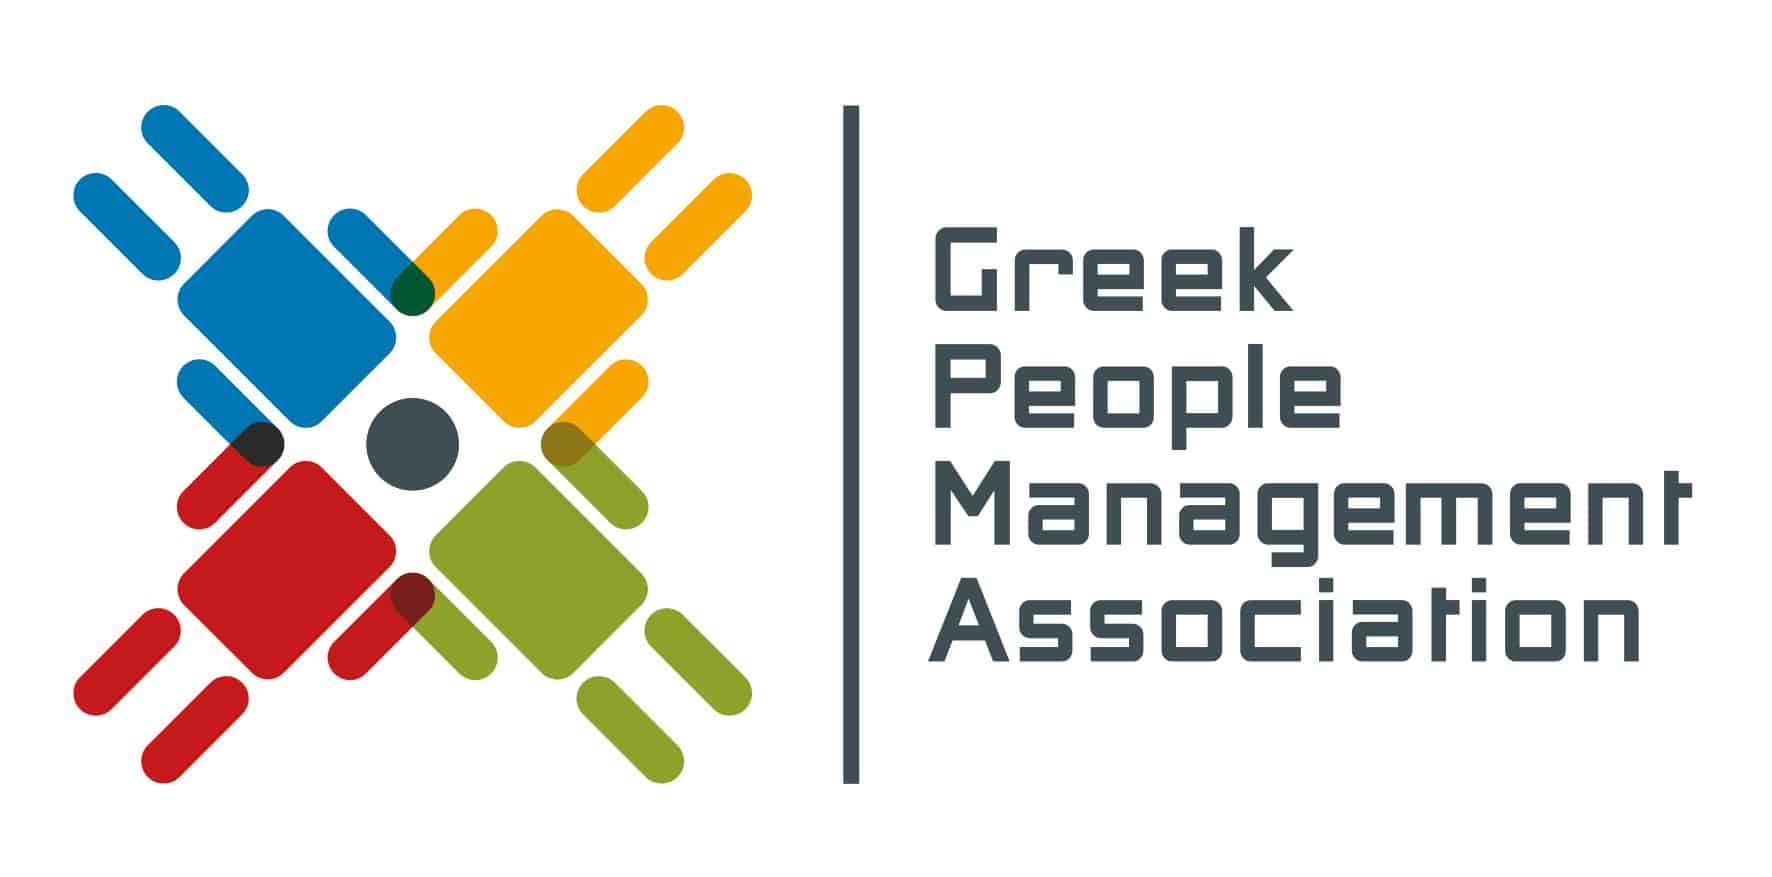 GREEK PEOPLE MANAGEMENT ASSOCIATION